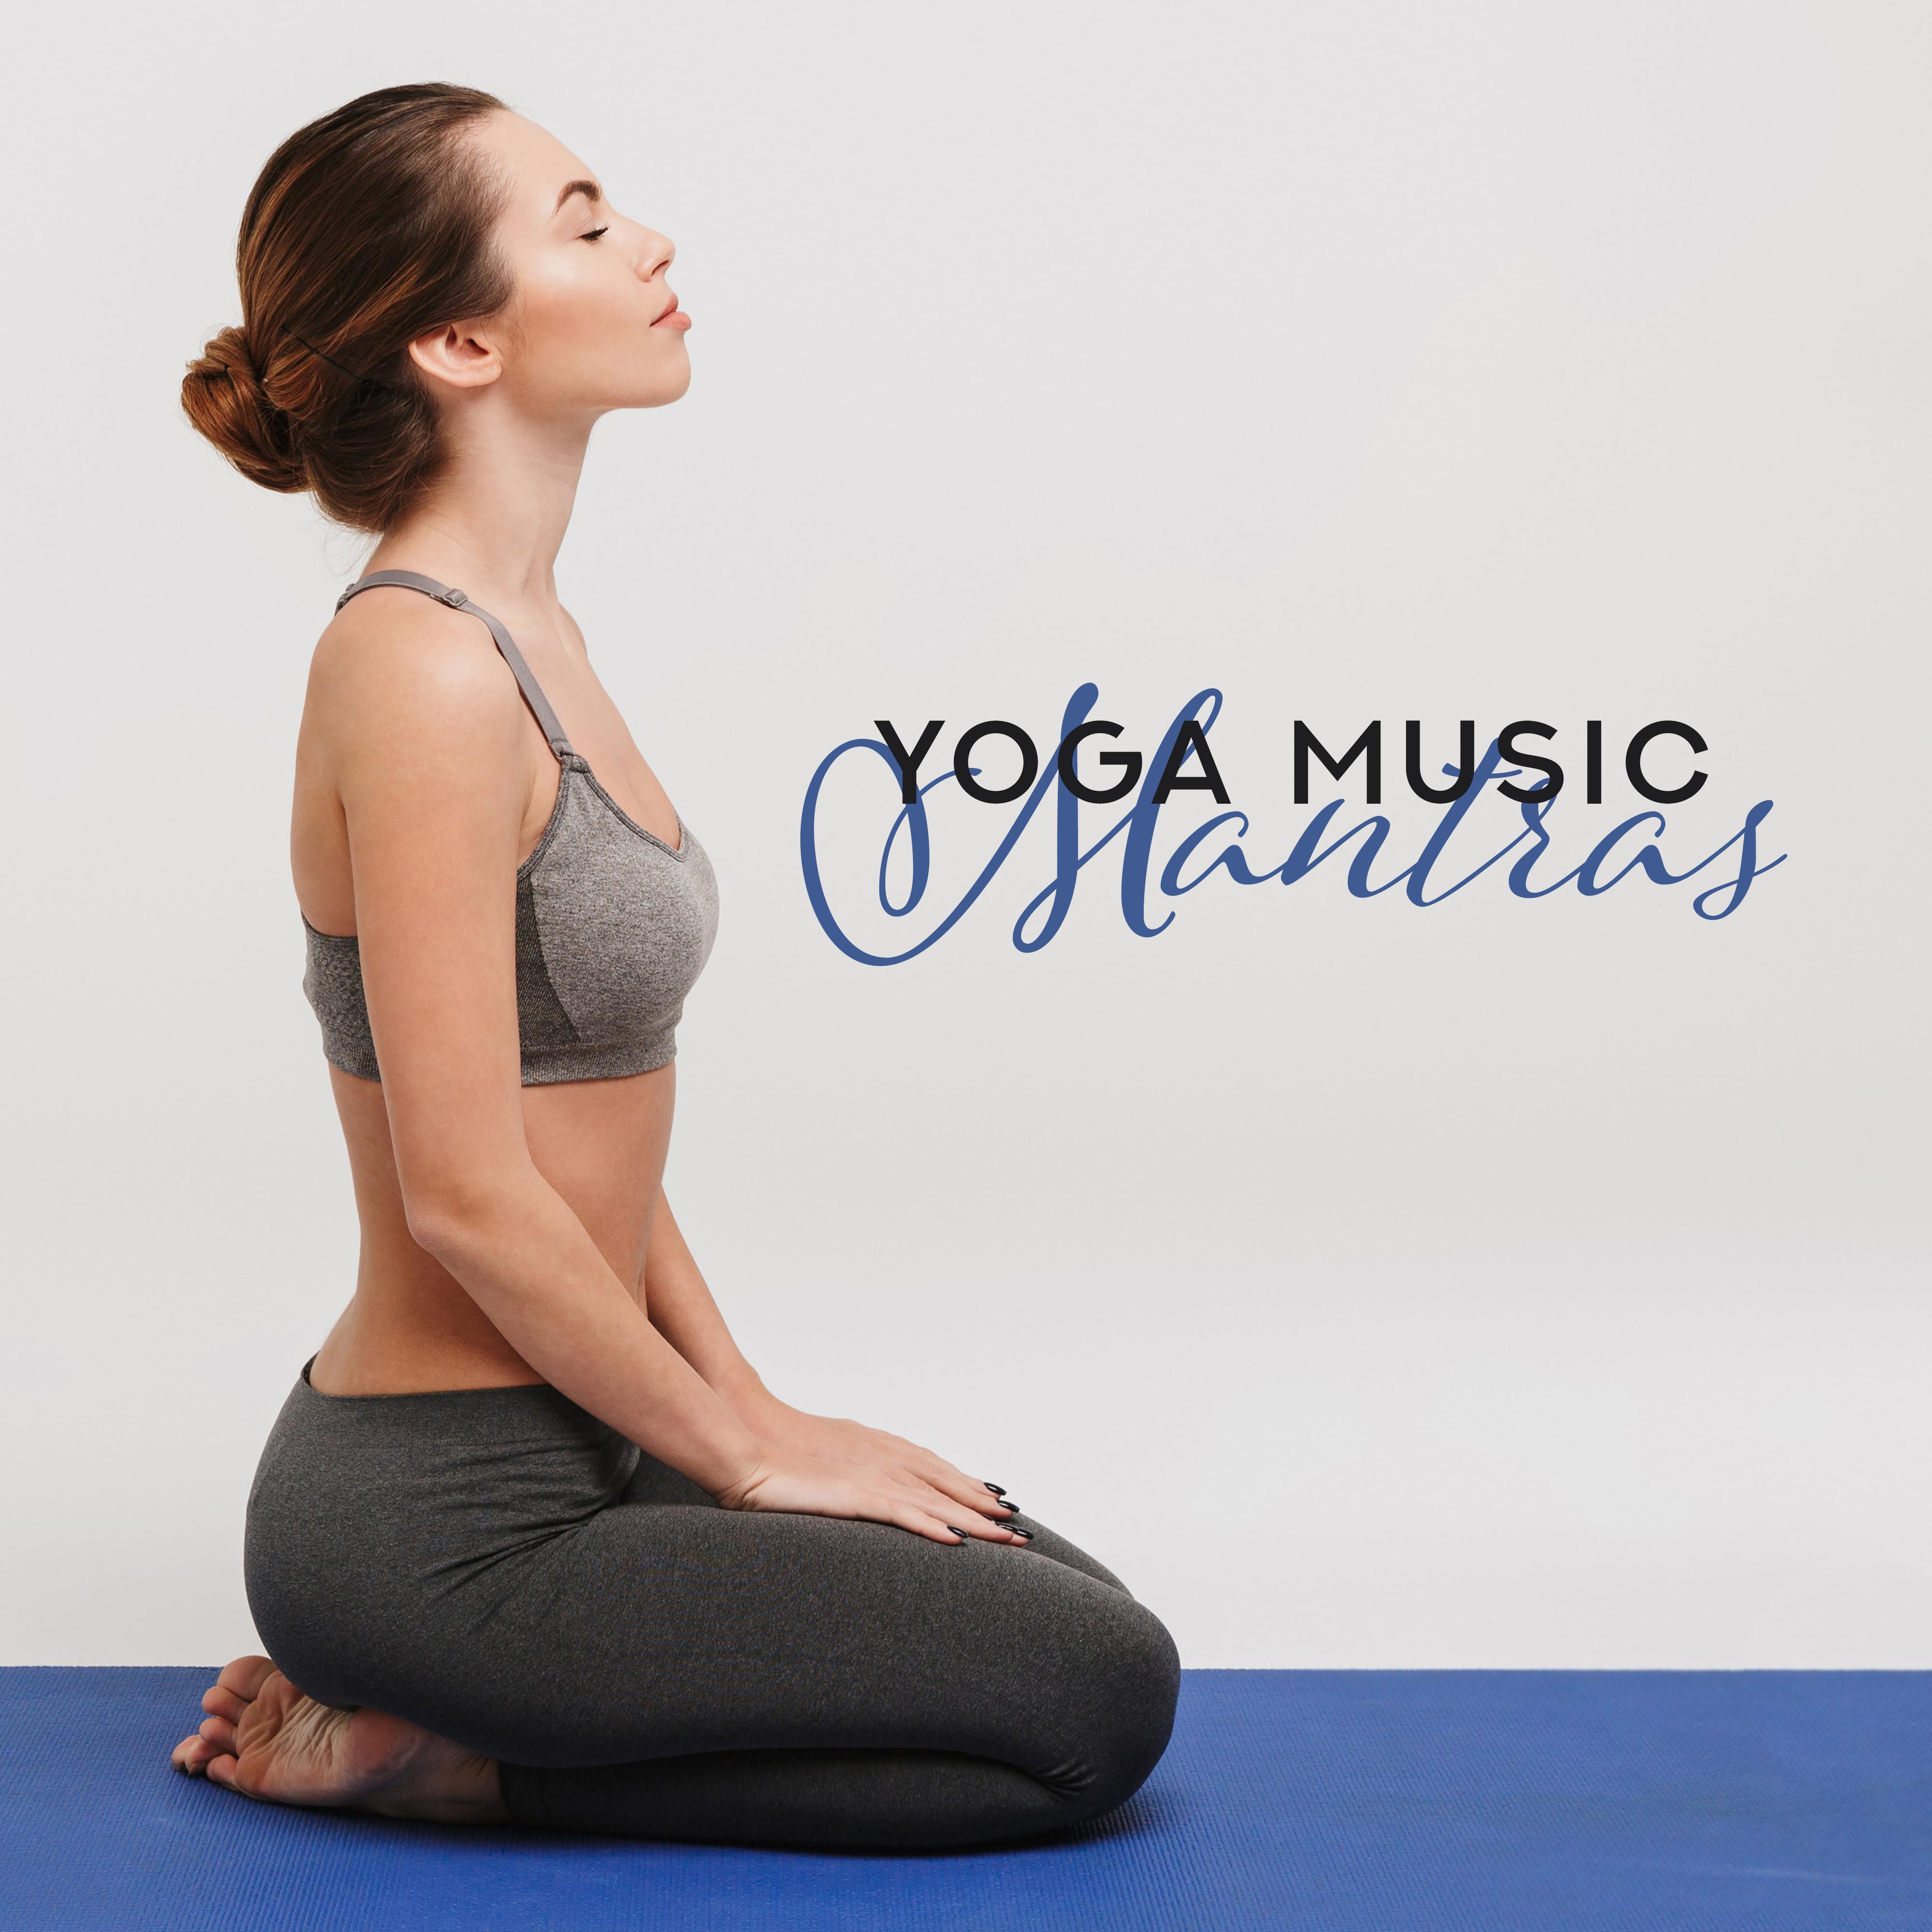 Yoga Music Mantras  Meditation Music Zone, Healing Yoga Sounds, Relaxing Music for Training Yoga, Deep Meditation, Inner Harmony, Deep Relaxation